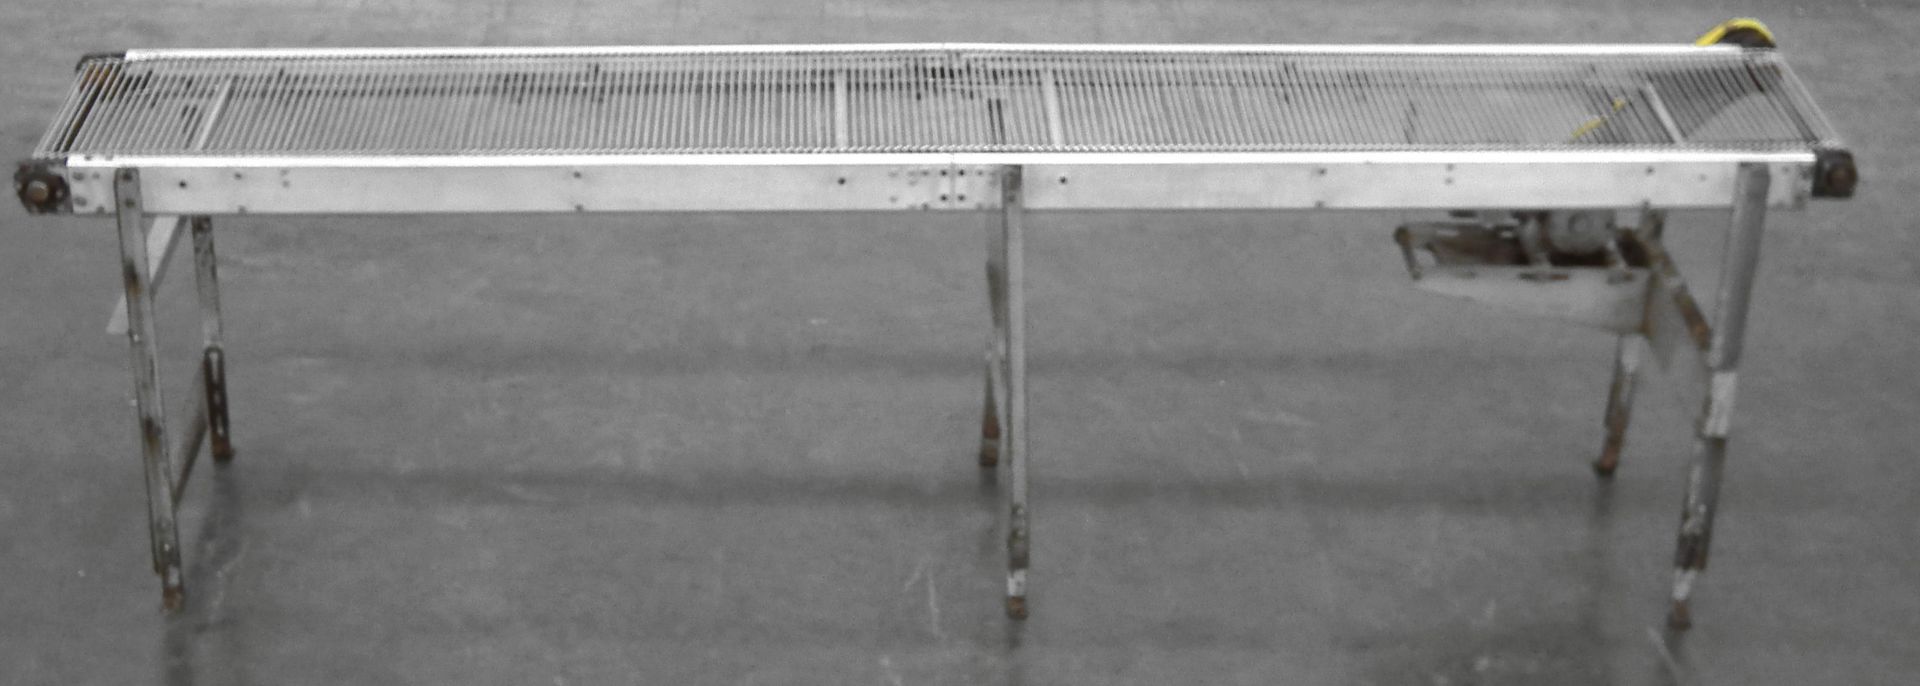 11 Feet Long x 18" Wide Wire Rod Conveyor - Image 4 of 11